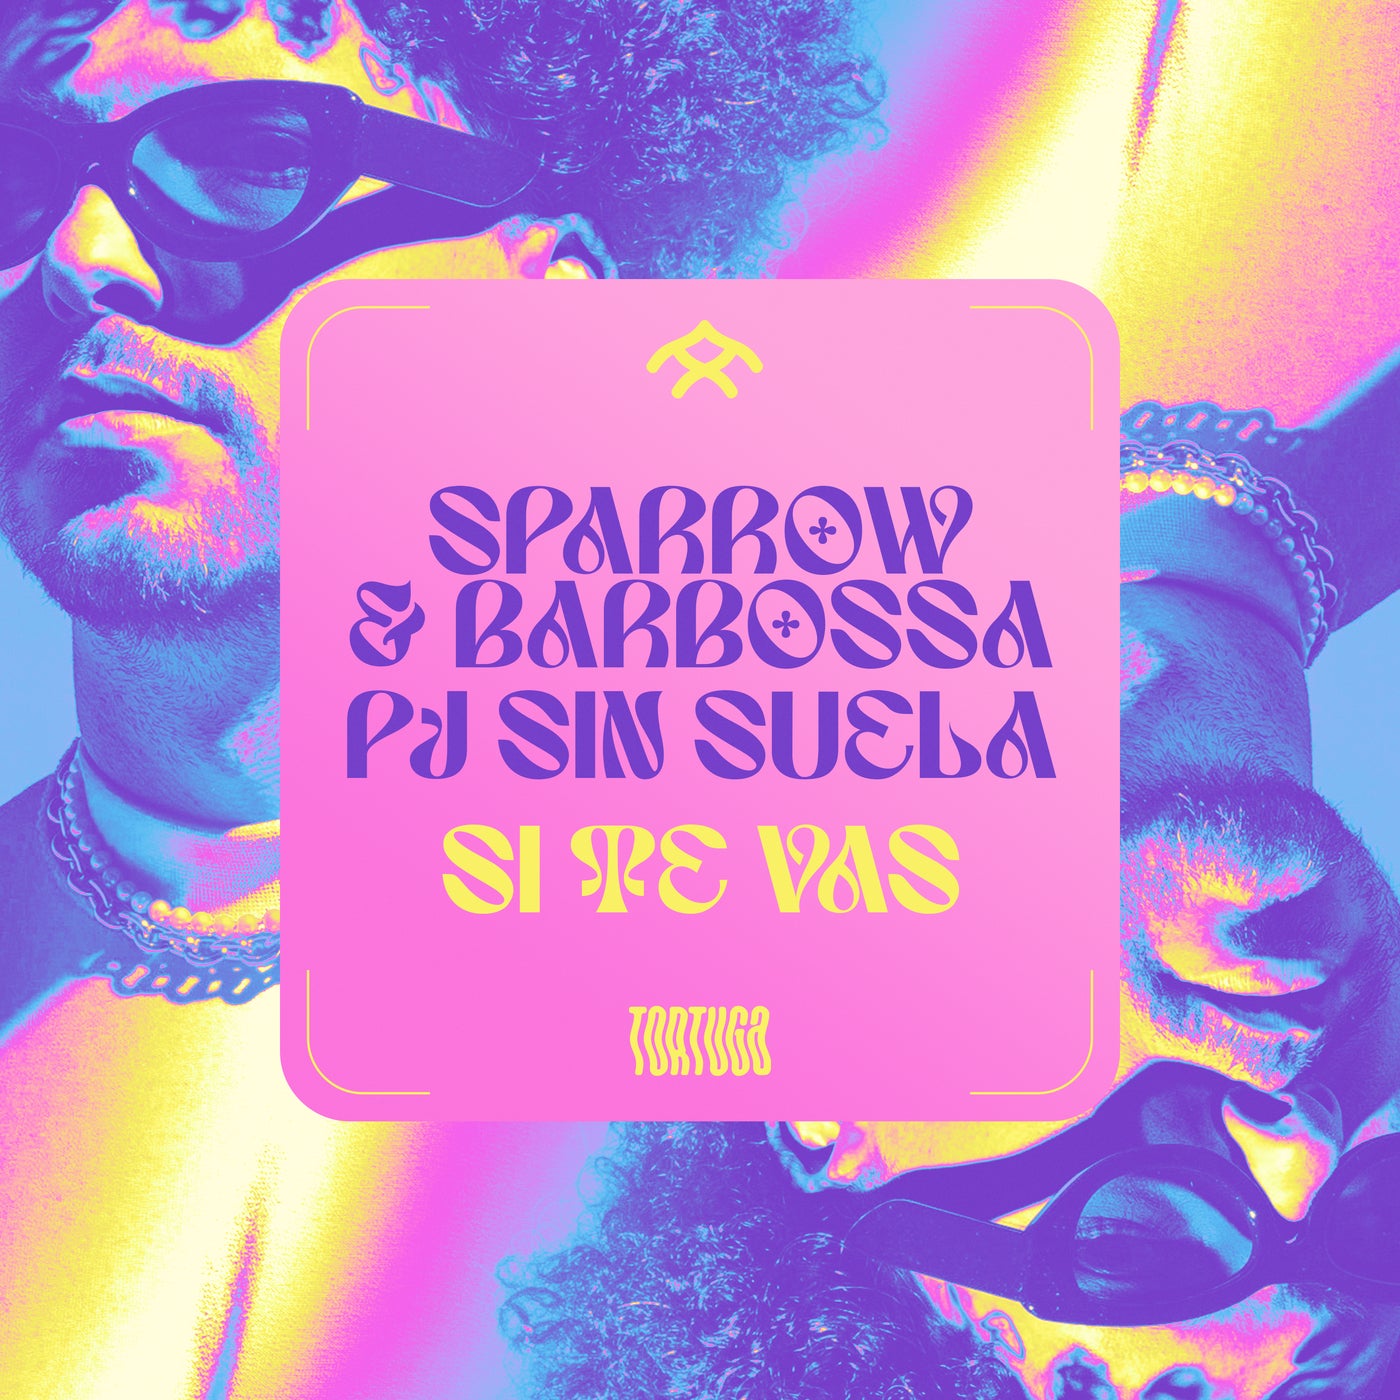 Sparrow & Barbossa & Pj Sin Suela - Si Te Vas on Tortuga